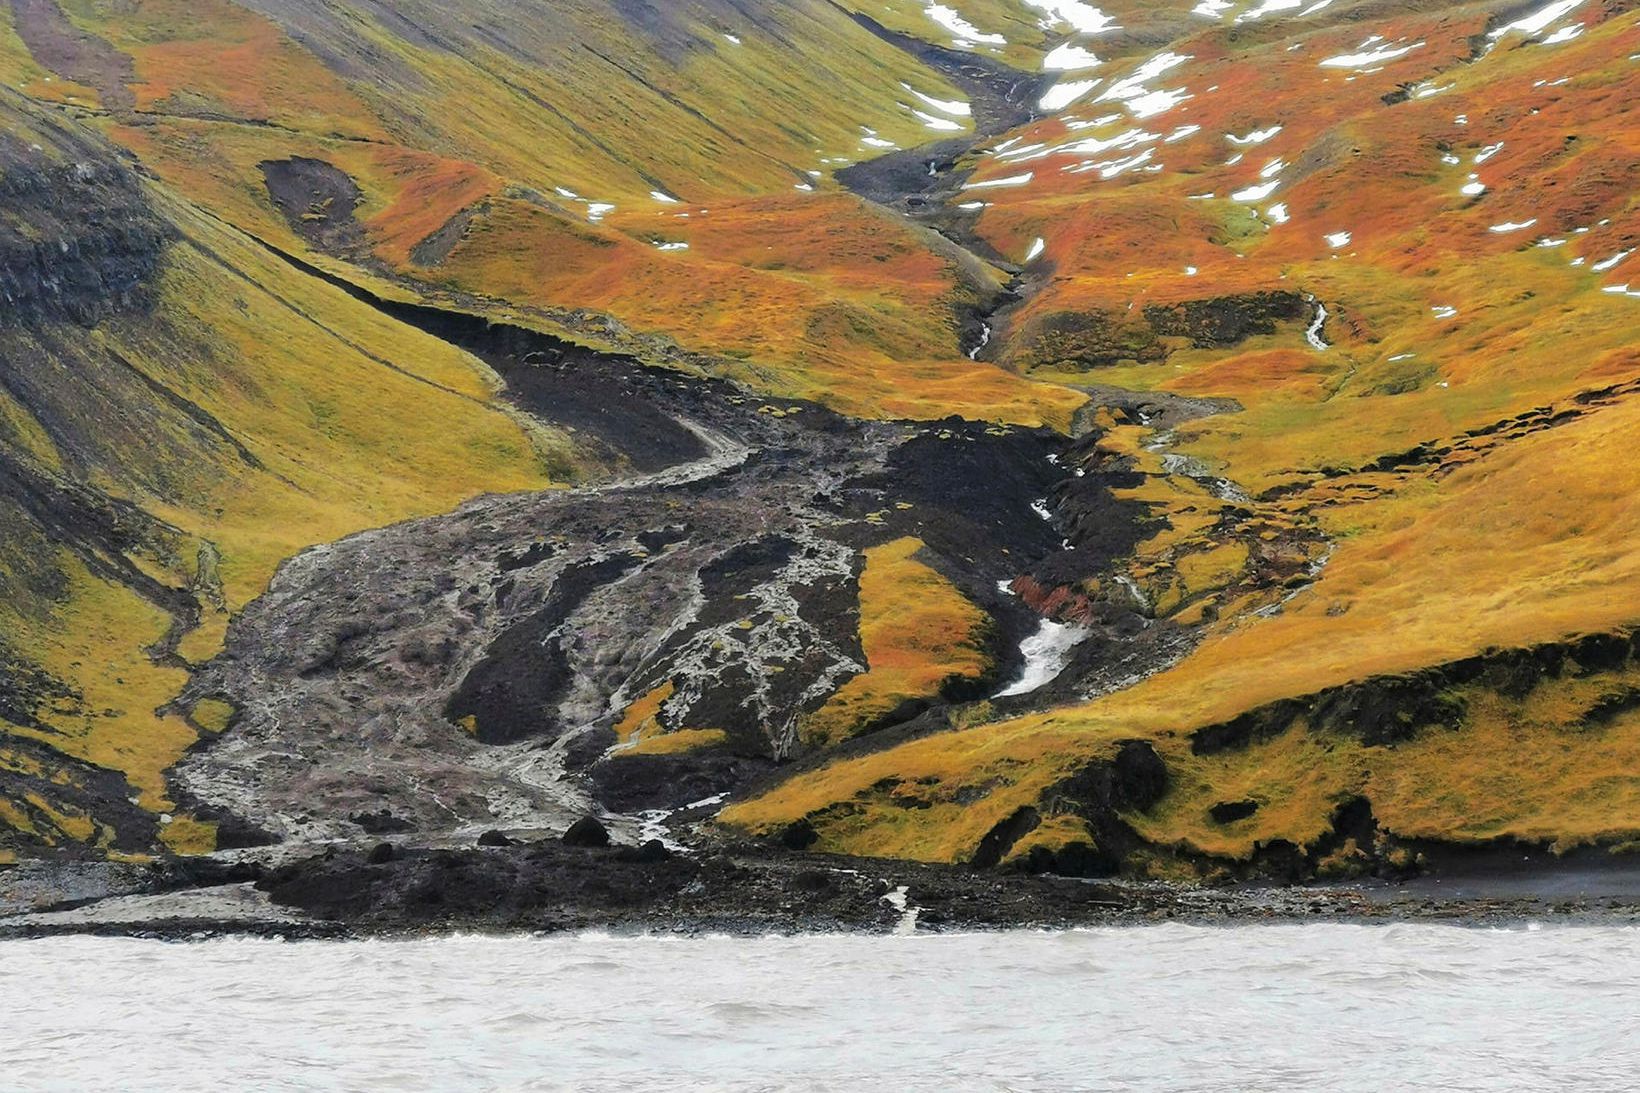 Some of the landslides at Kinnarfjöll in Iceland. 